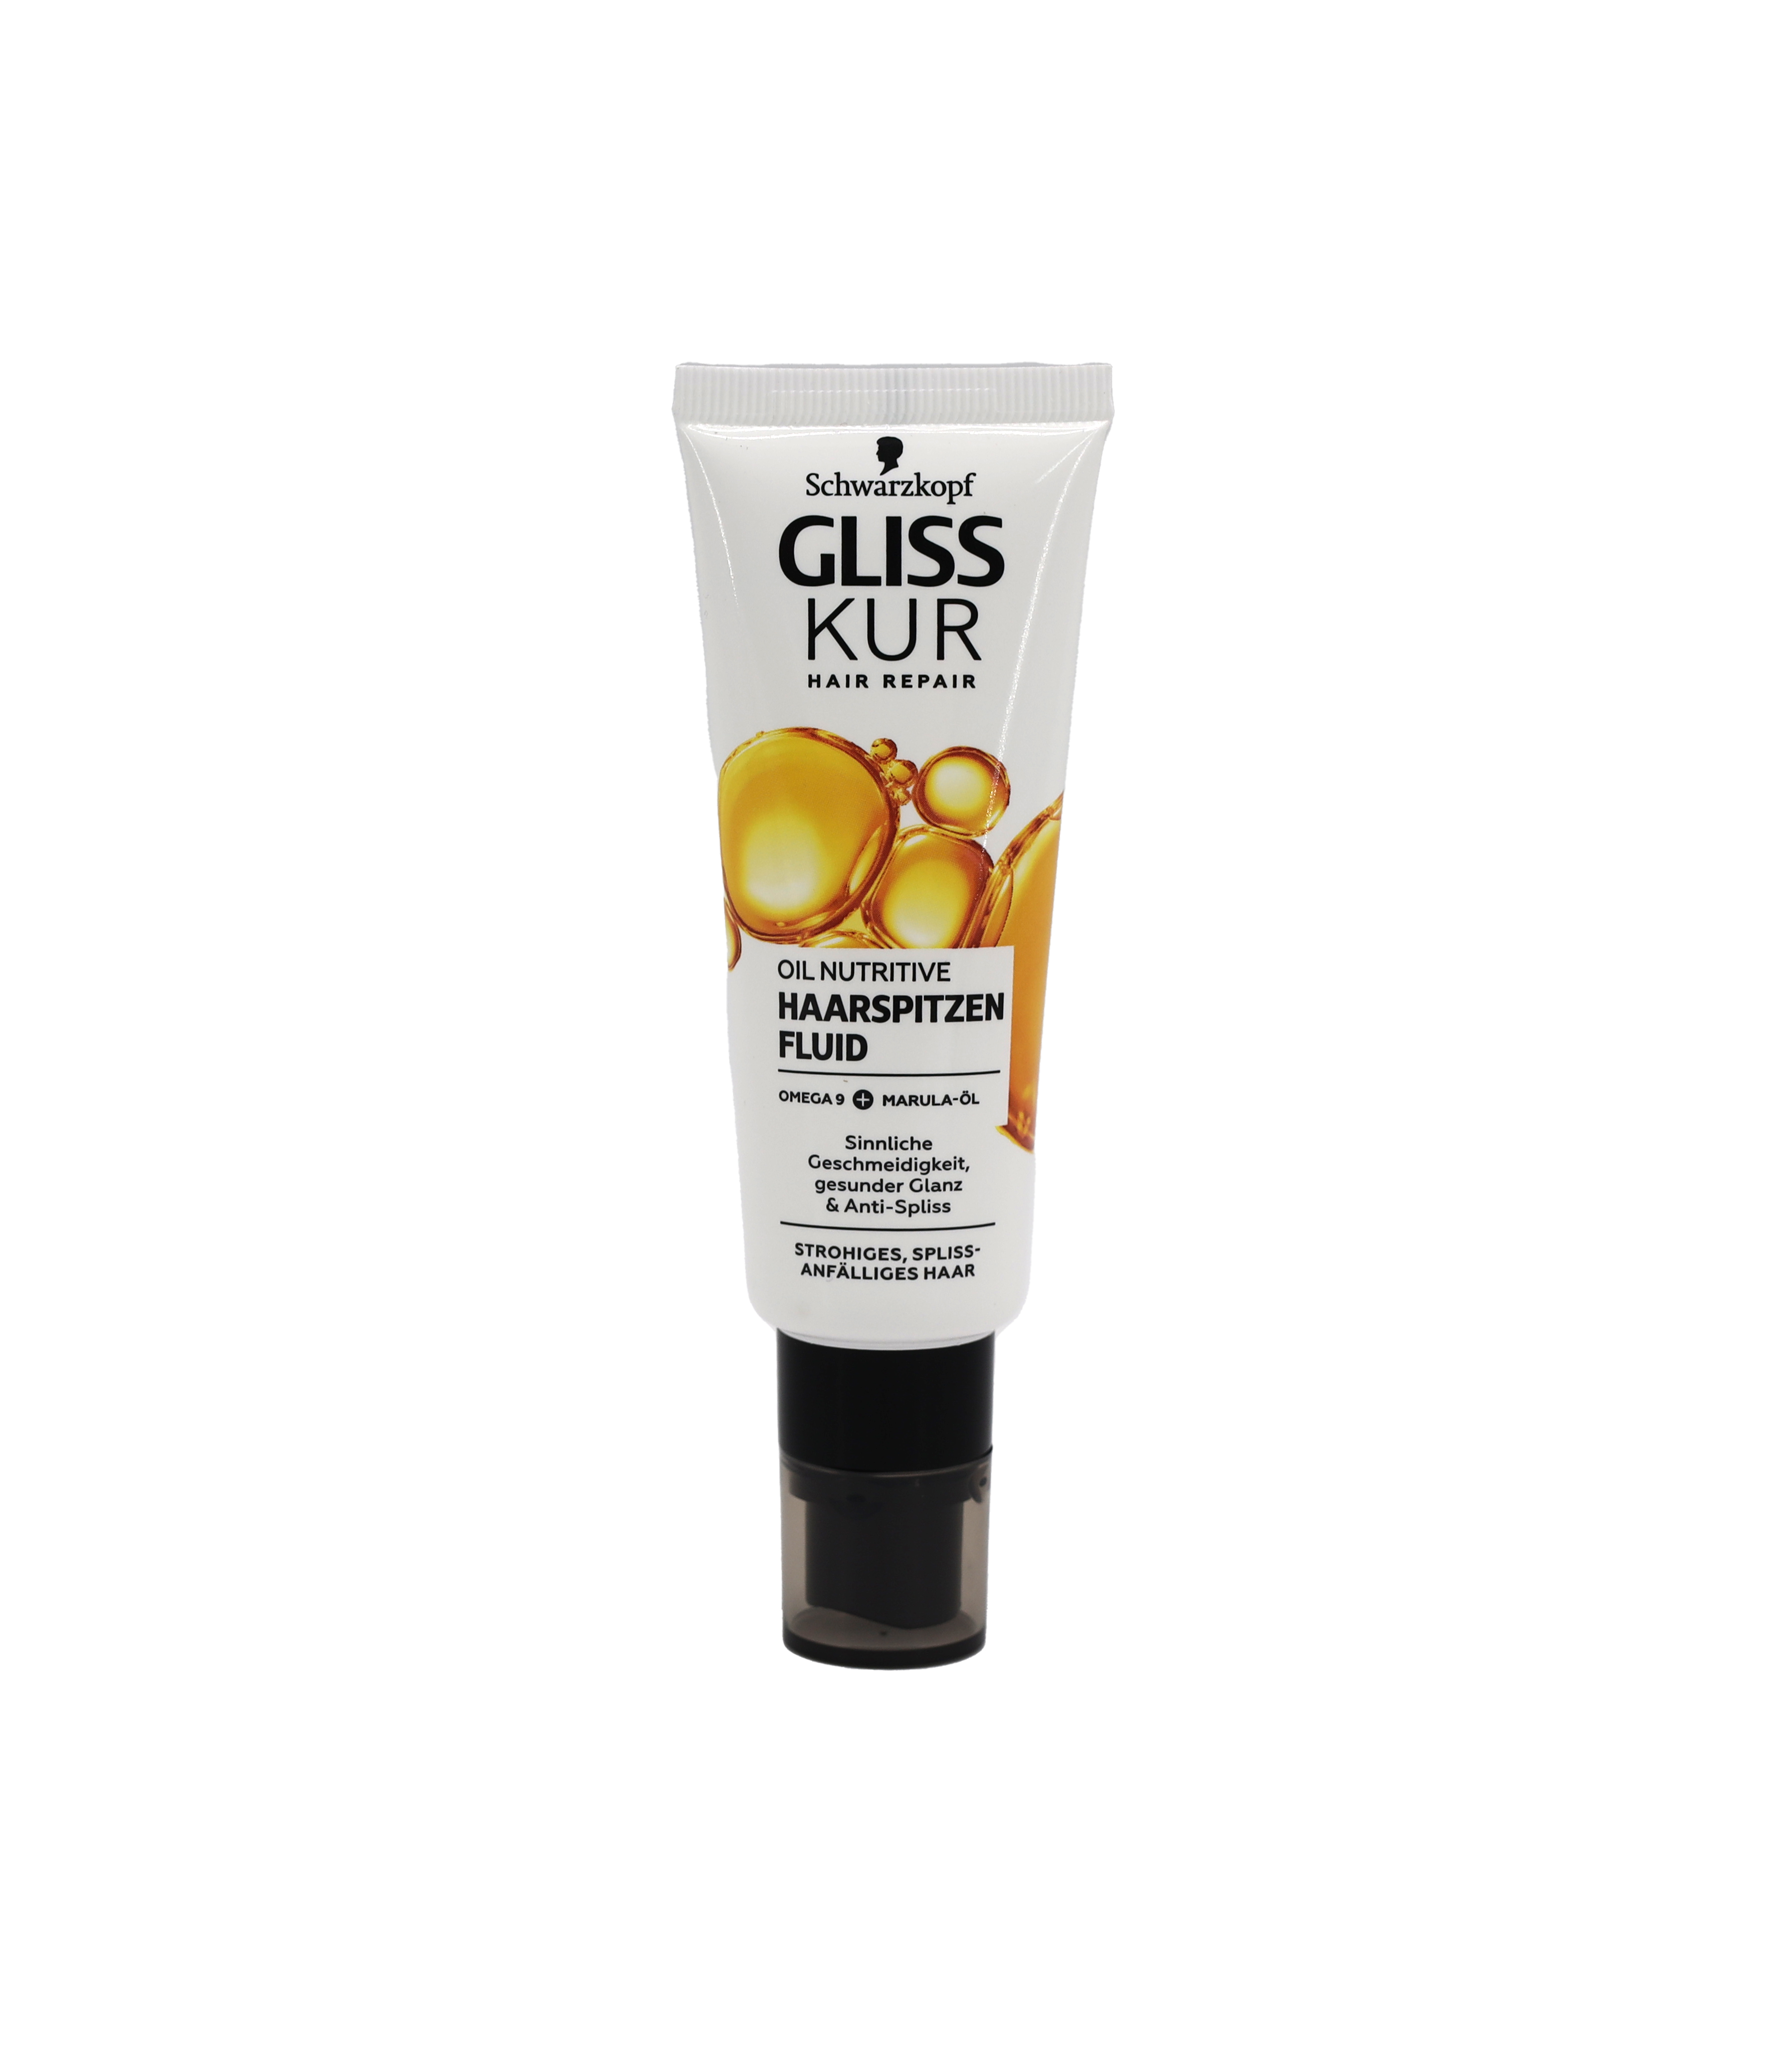 Gliss Kur Oil Nutritive Haarspitzenfluid Spender 50ml